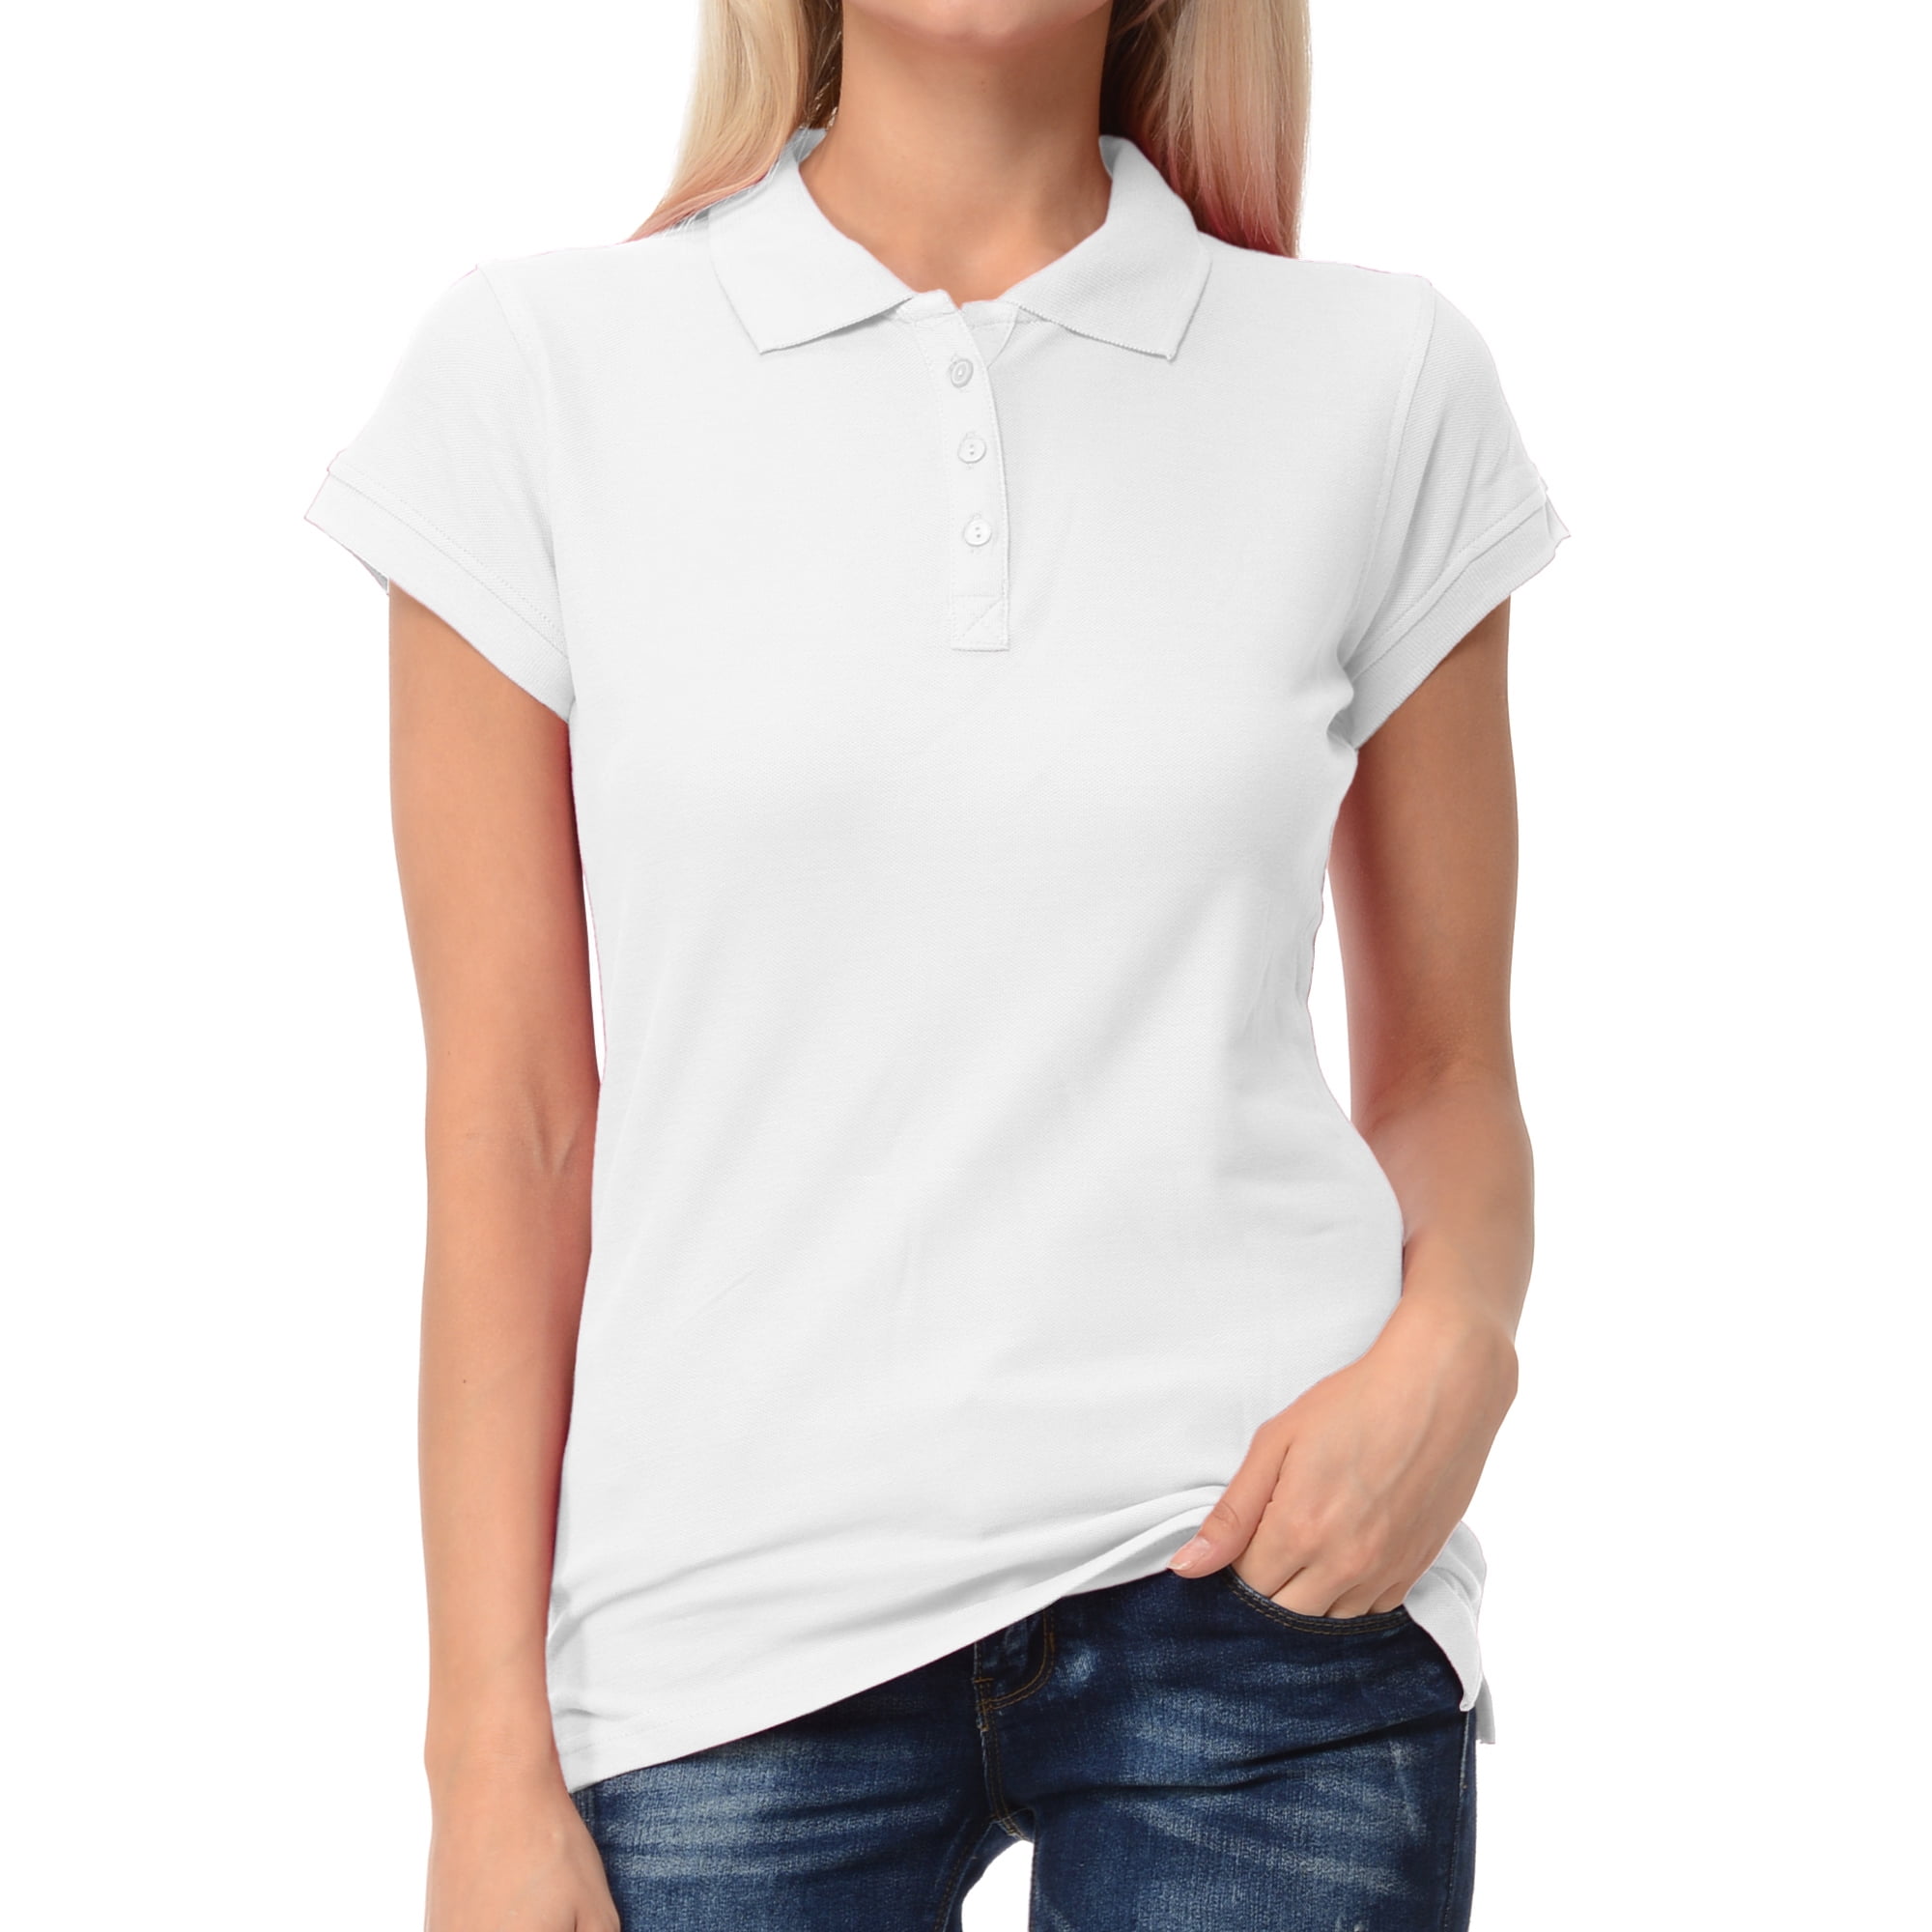 G toernooi palm Basico Women Junior's Short Sleeve Slim Fit Polo Shirt 100% Cotton -  Walmart.com